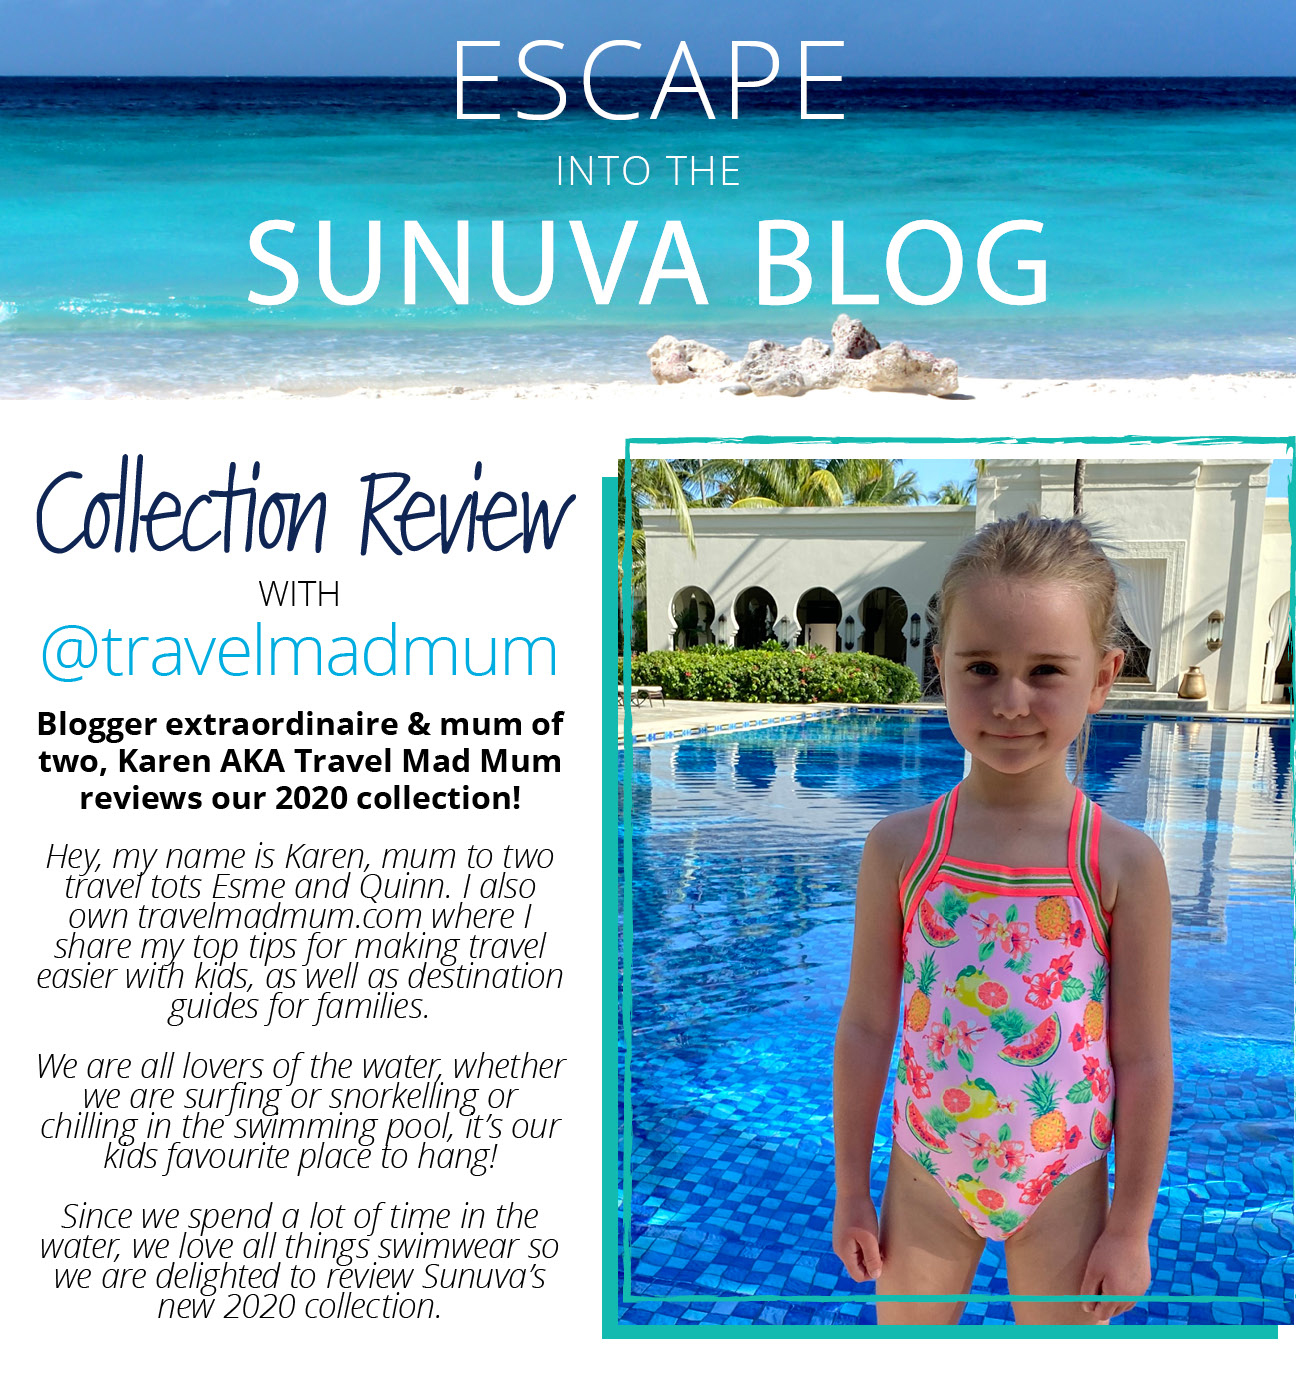 https://www.sunuva.com/blog/collection-review/